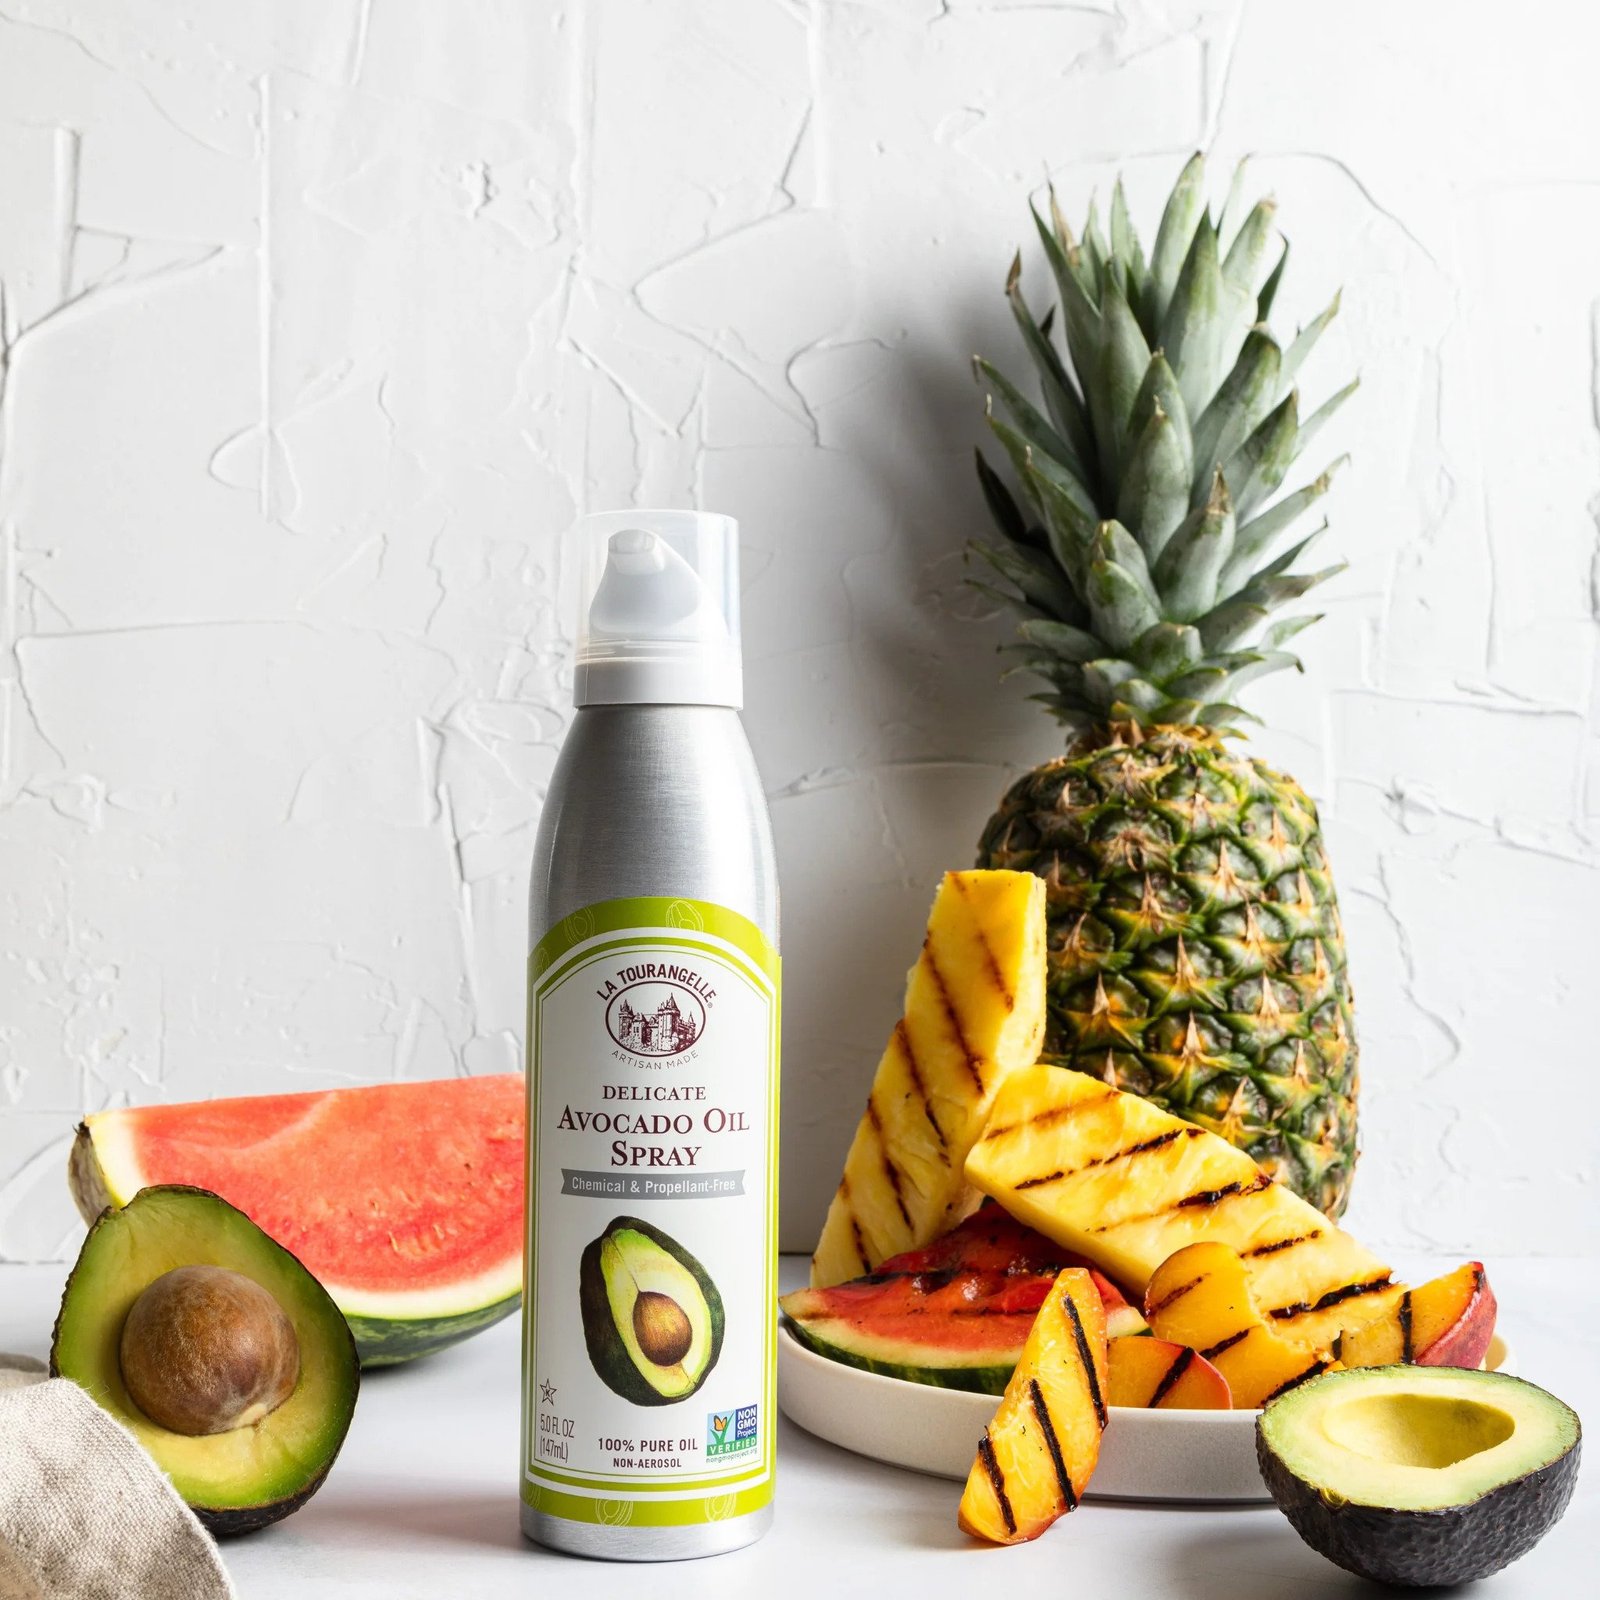 La Tourangelle avocado oil spray with pineapple, watermelon, and avocado